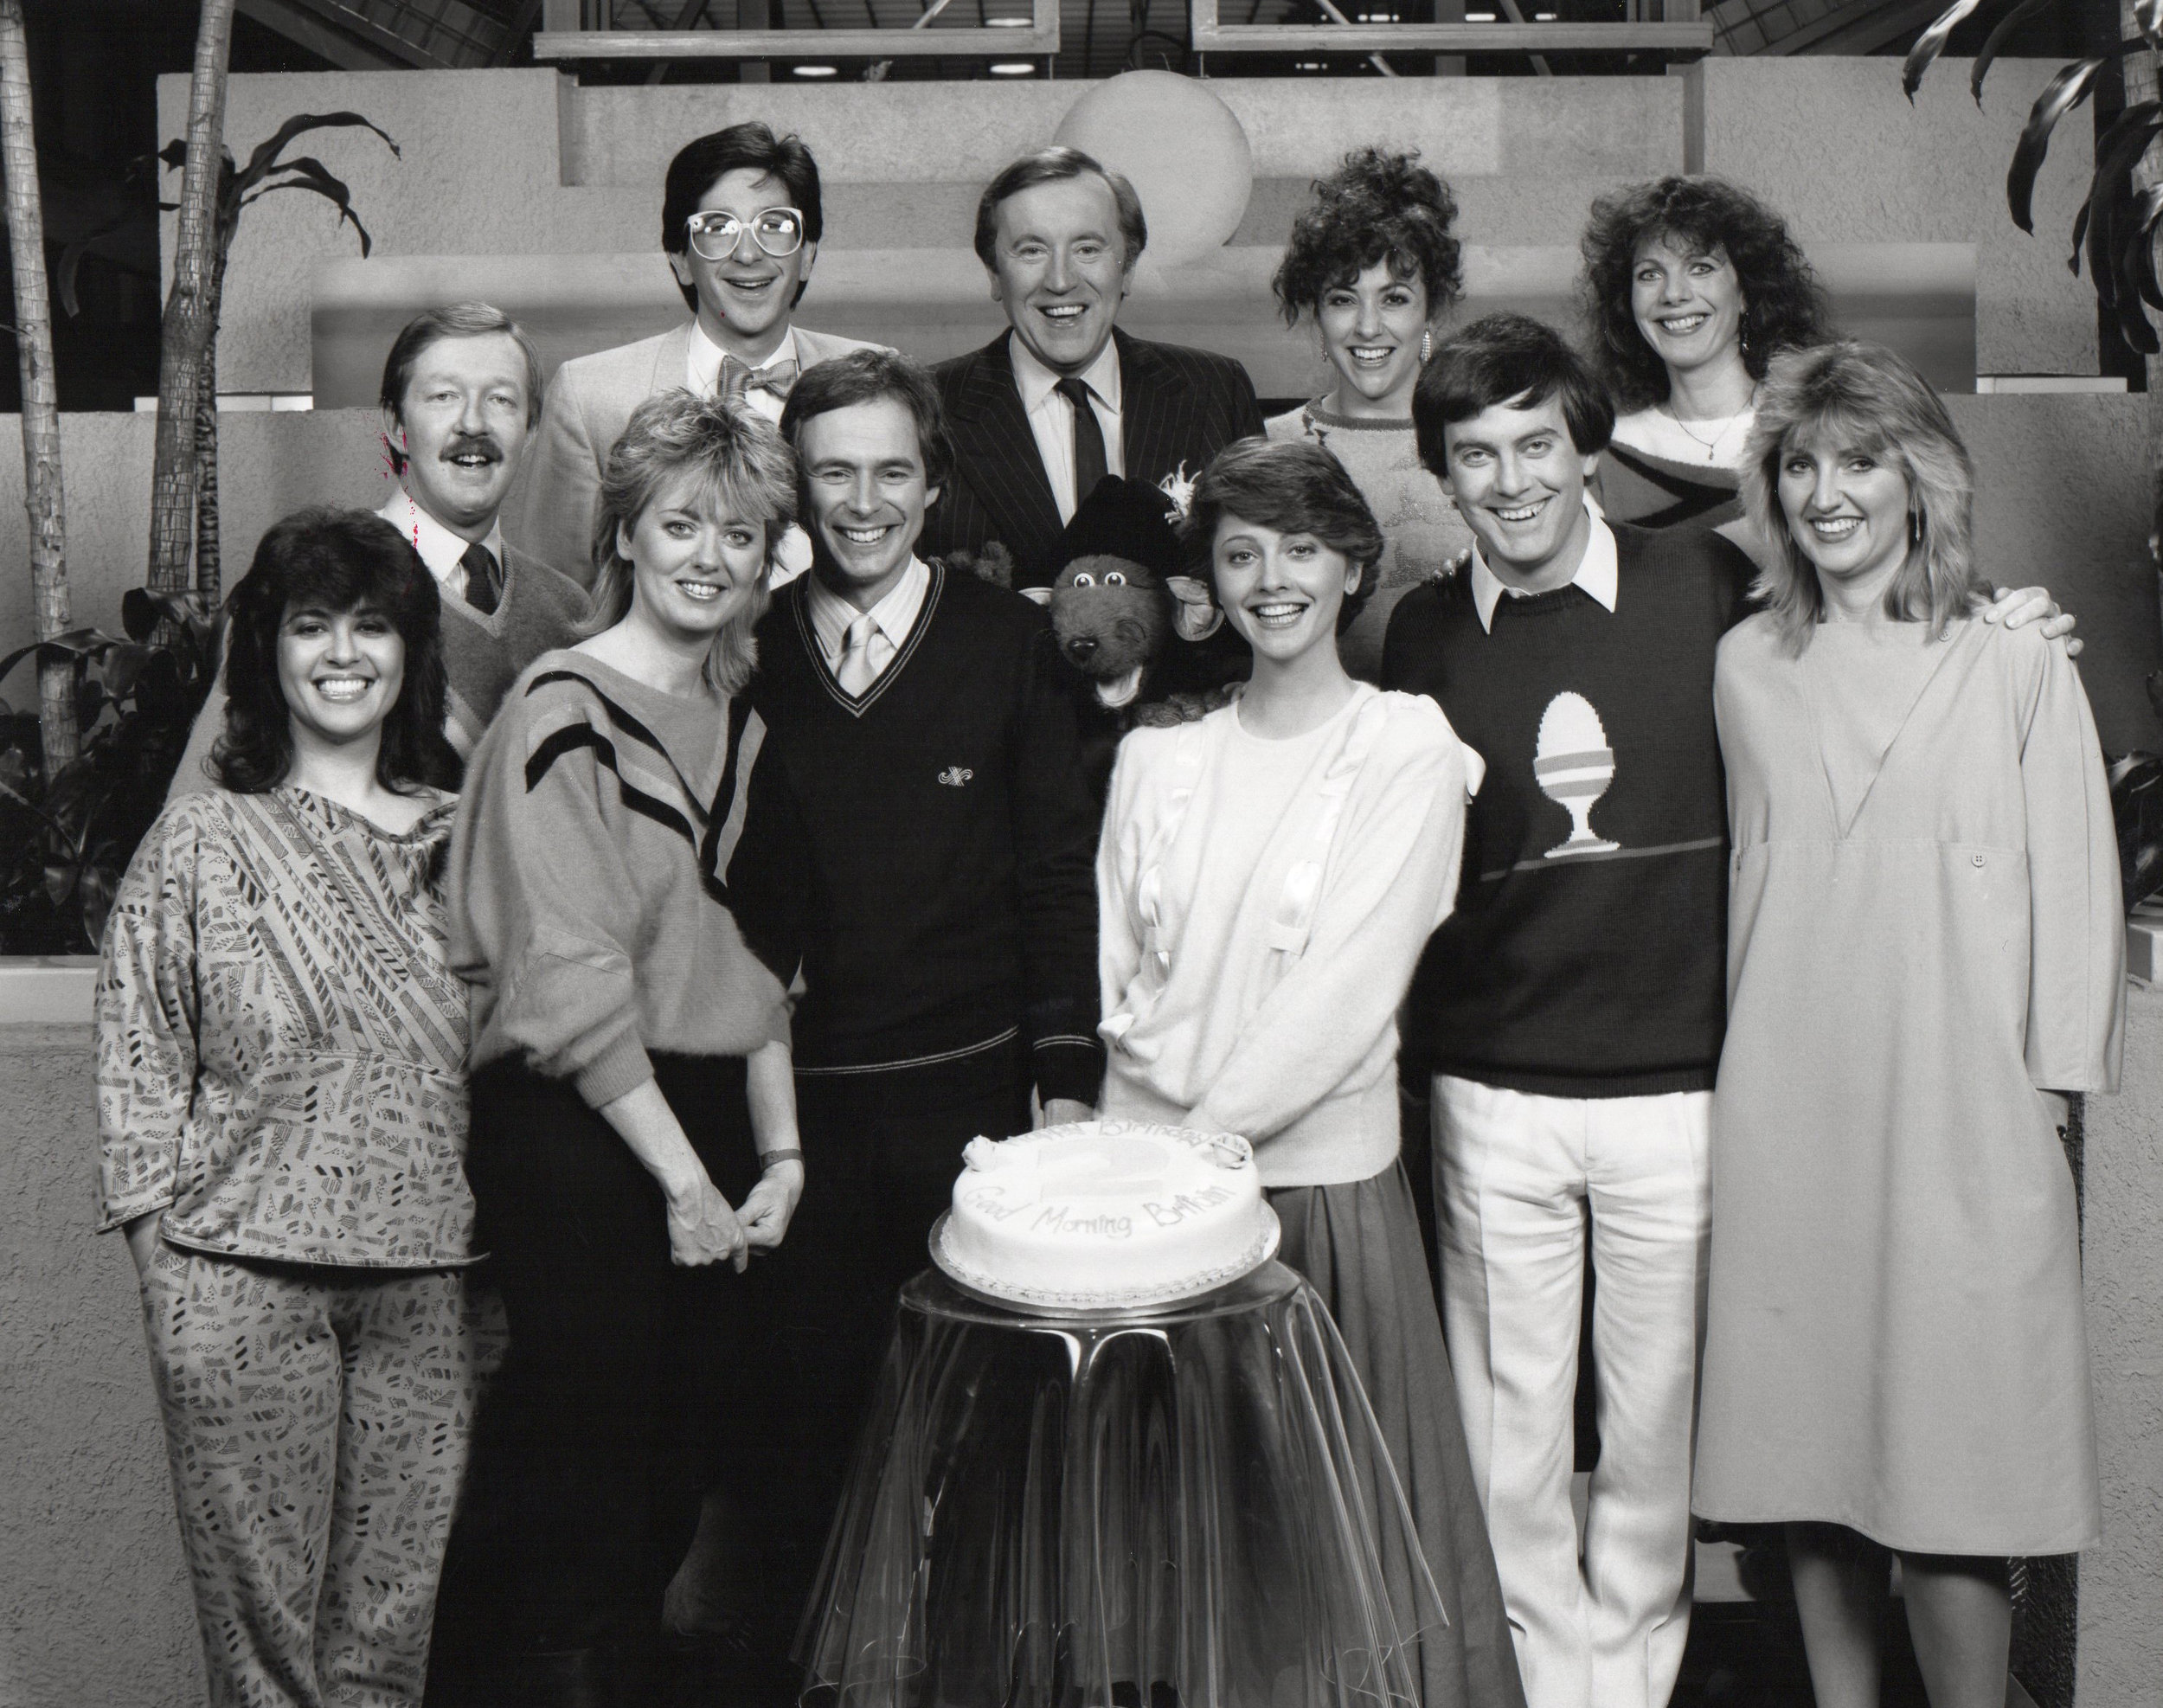 The TV-am team celebrates its second birthday, 1985